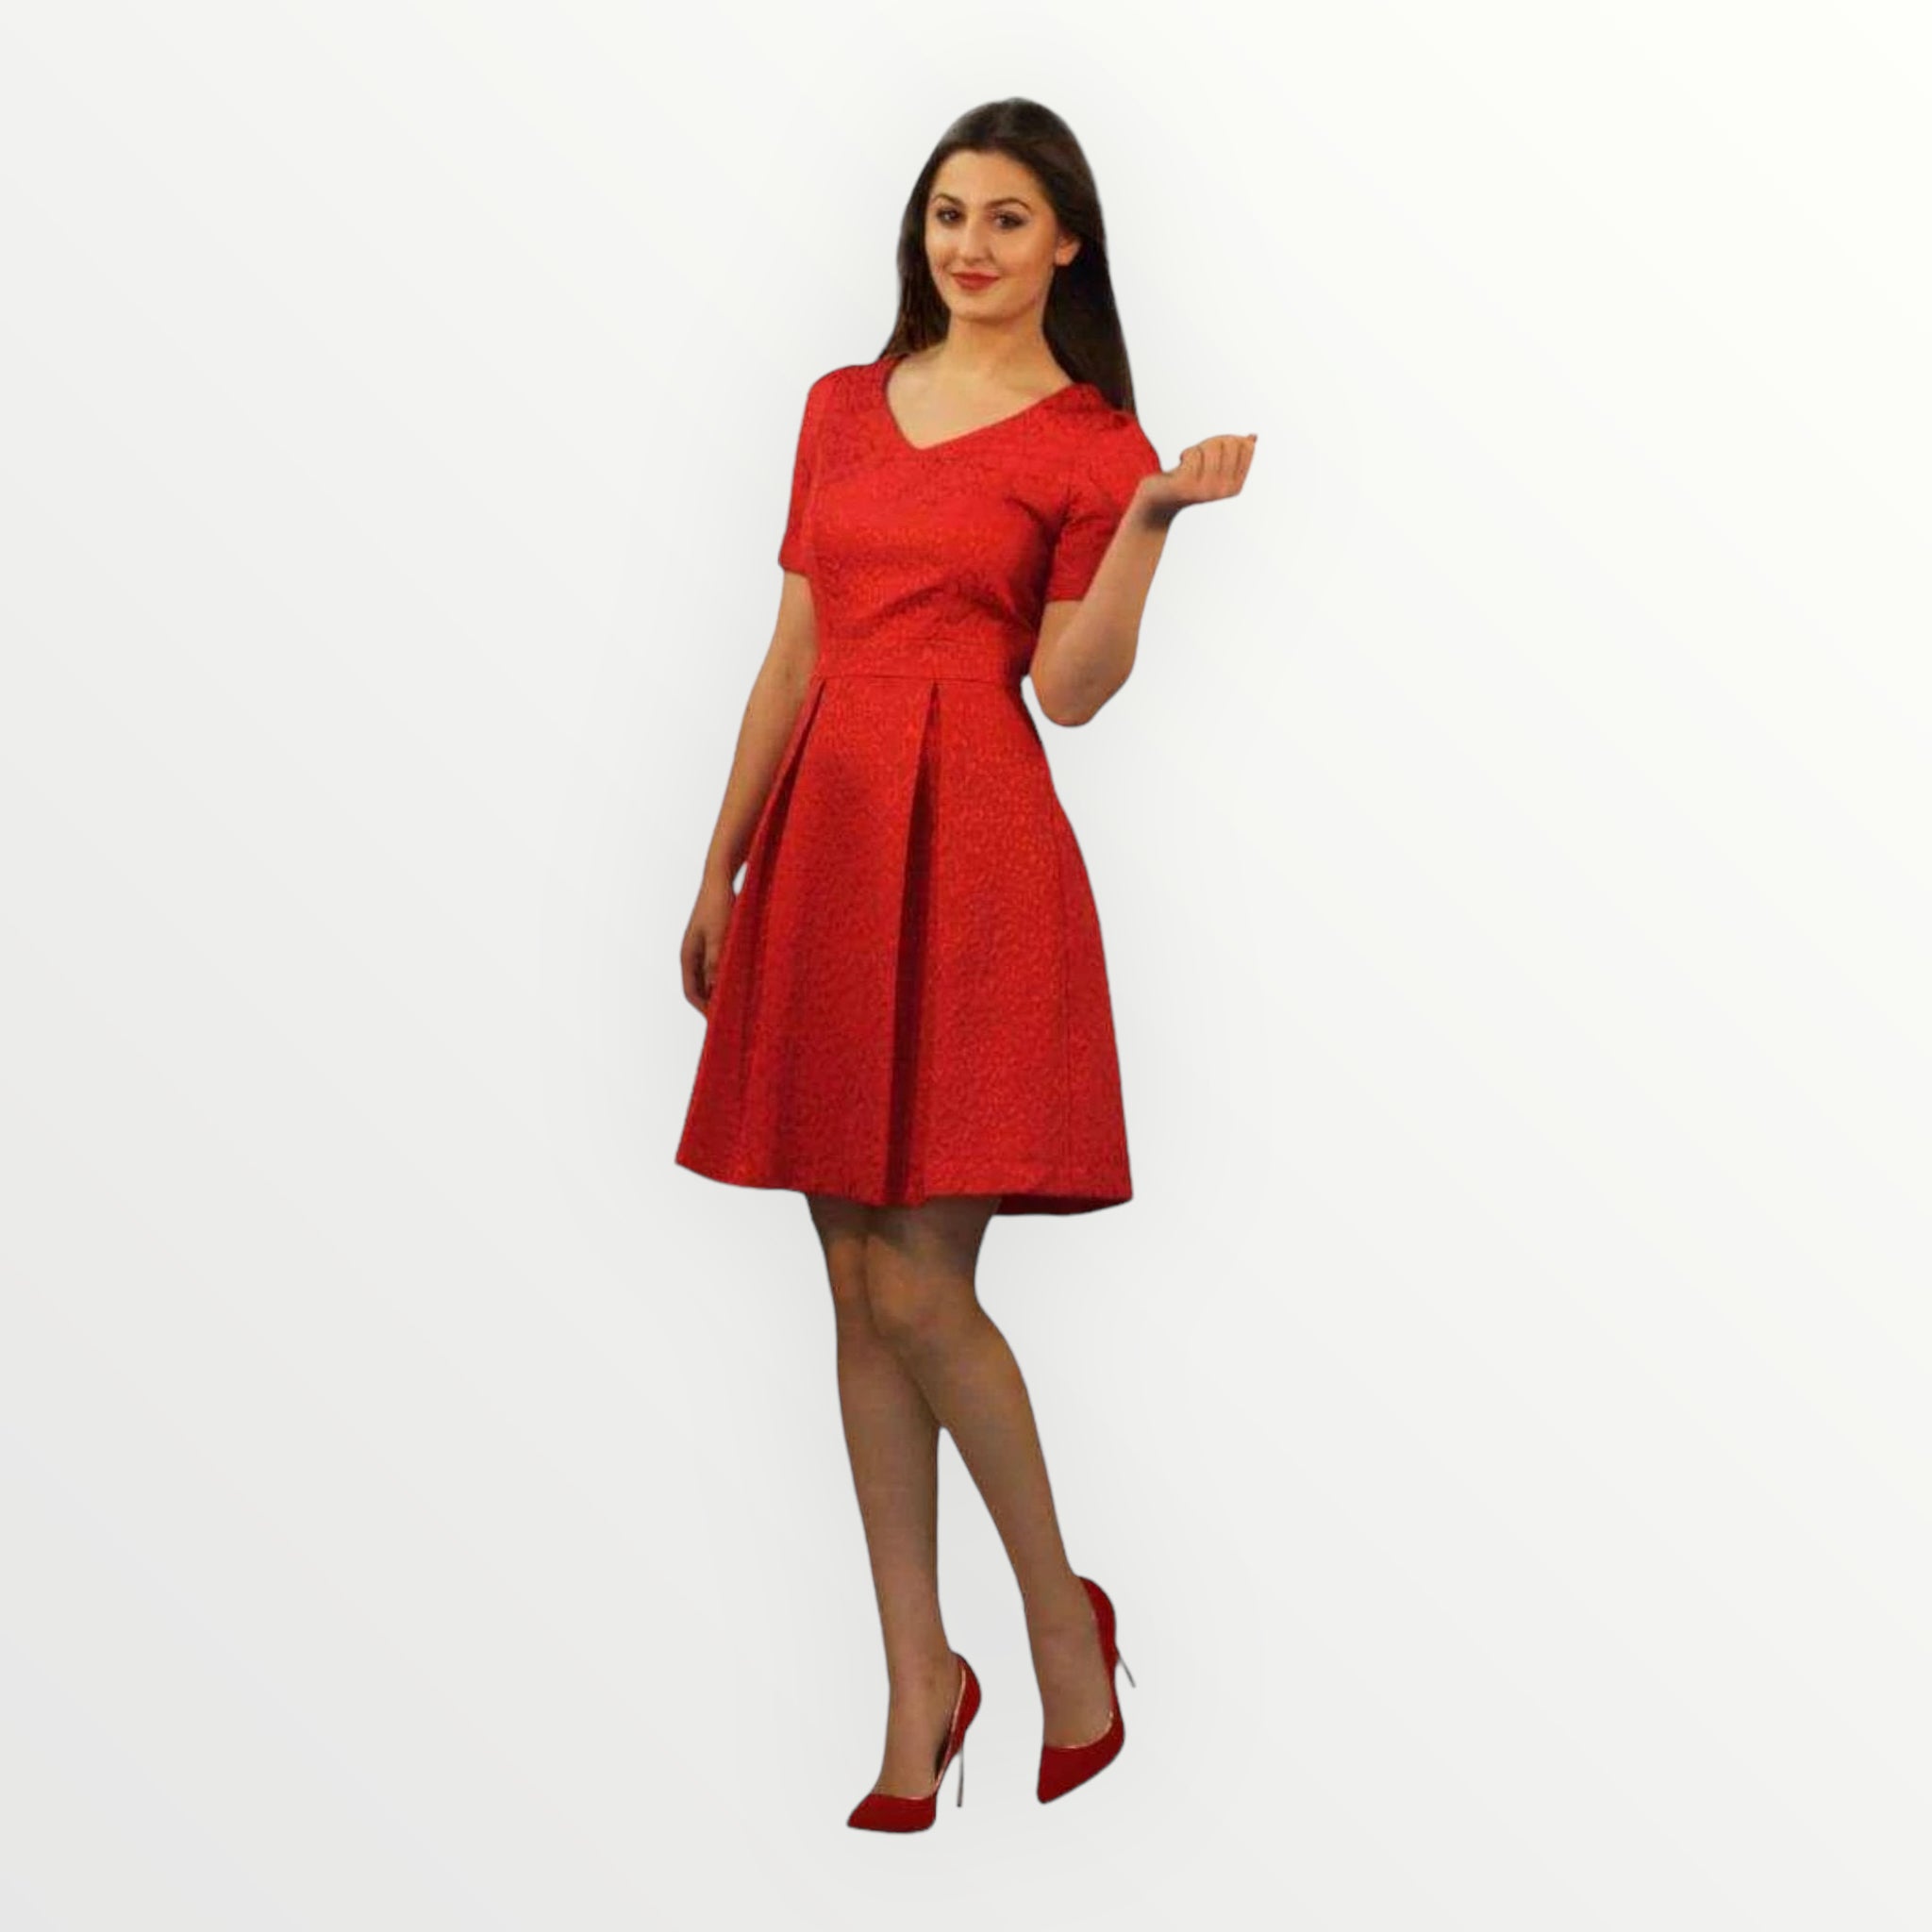 Skater dress in Red embossed brocade fabric